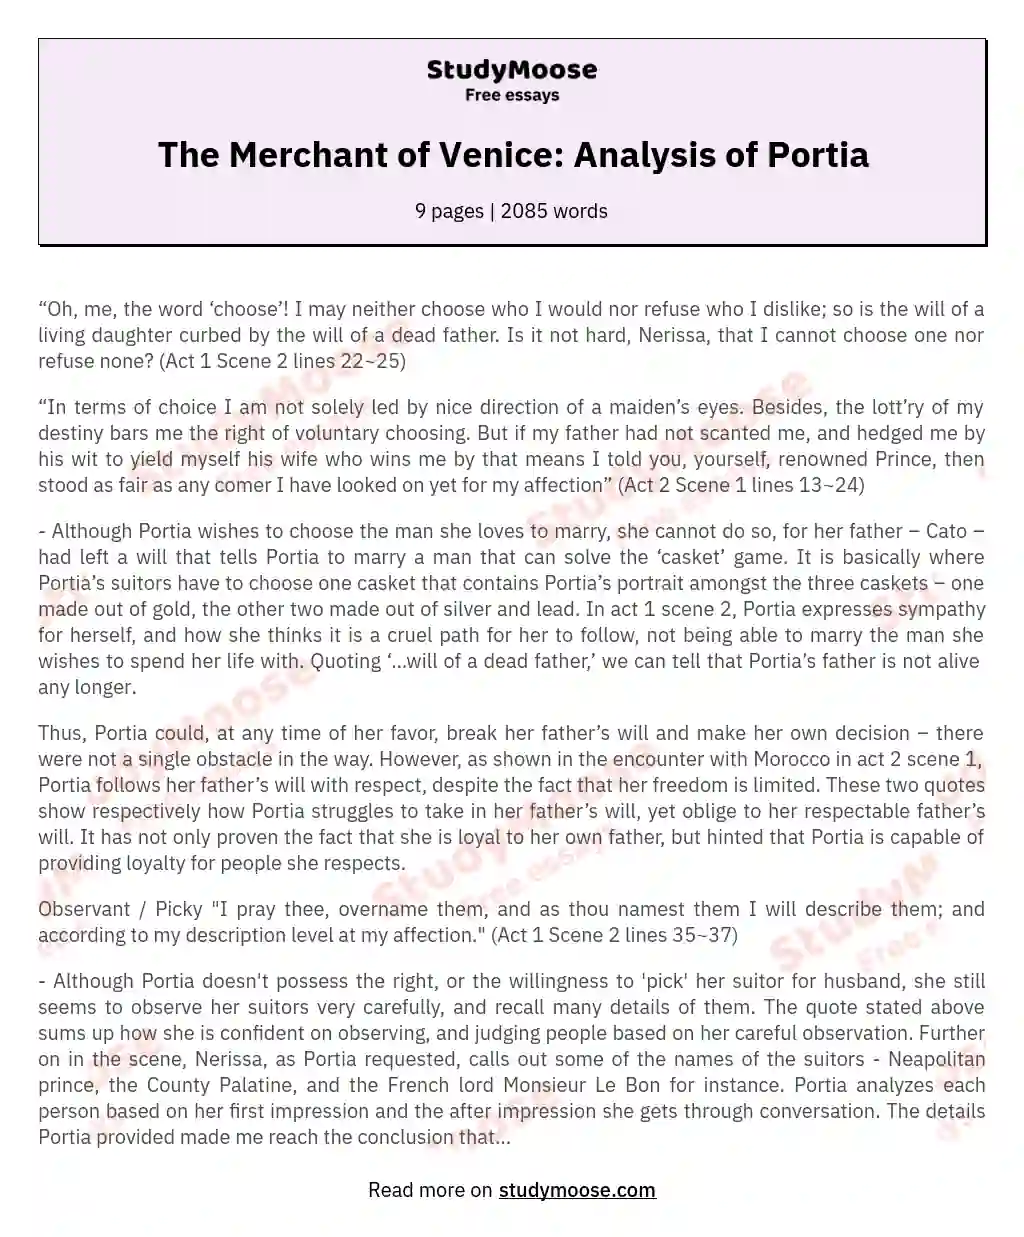 The Merchant of Venice: Analysis of Portia essay